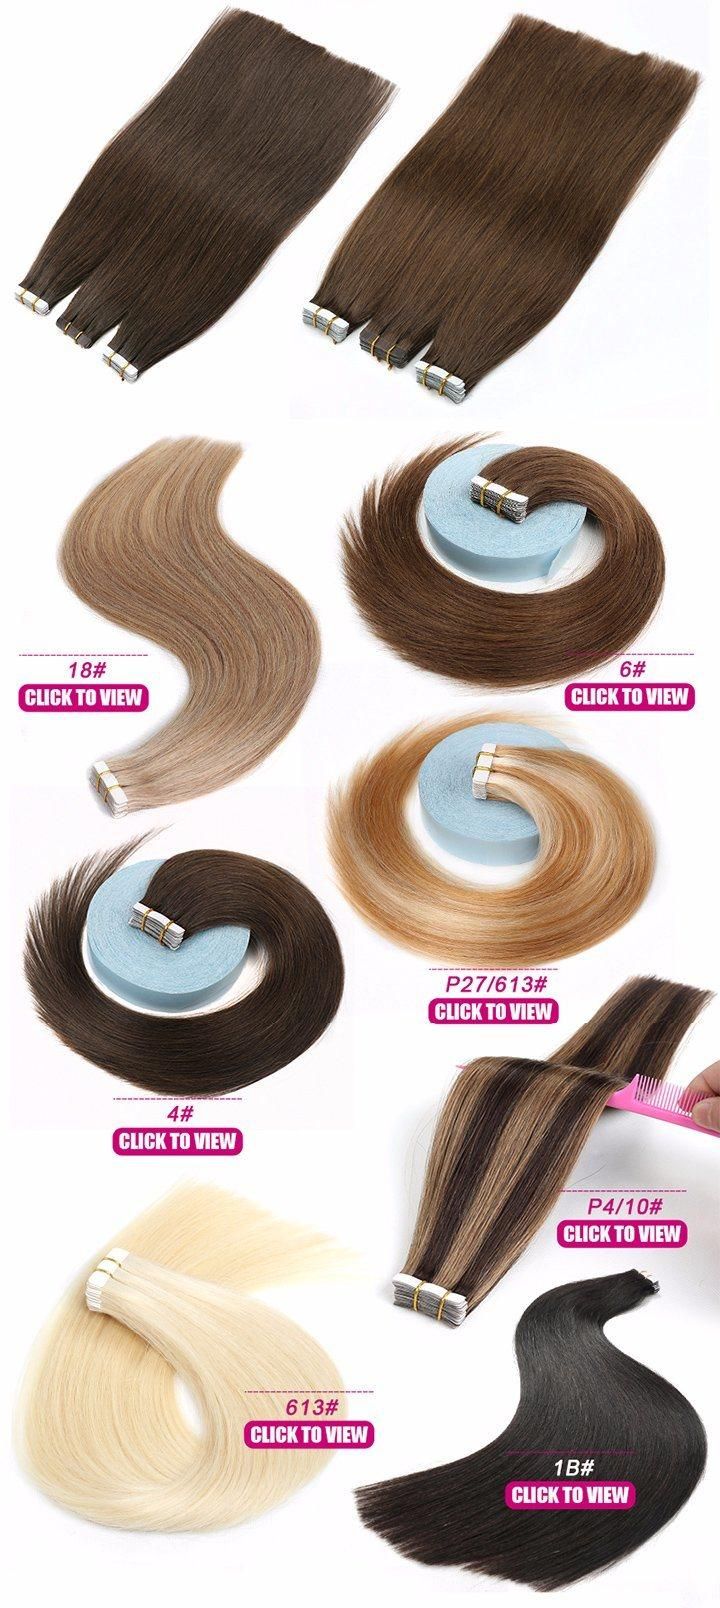 New Type Virgin Clip in Human Hair Extensions Full Head Peruvian Virgin Hair Clip Ins Wigs on 7A Remy Clip in Hair Extensions